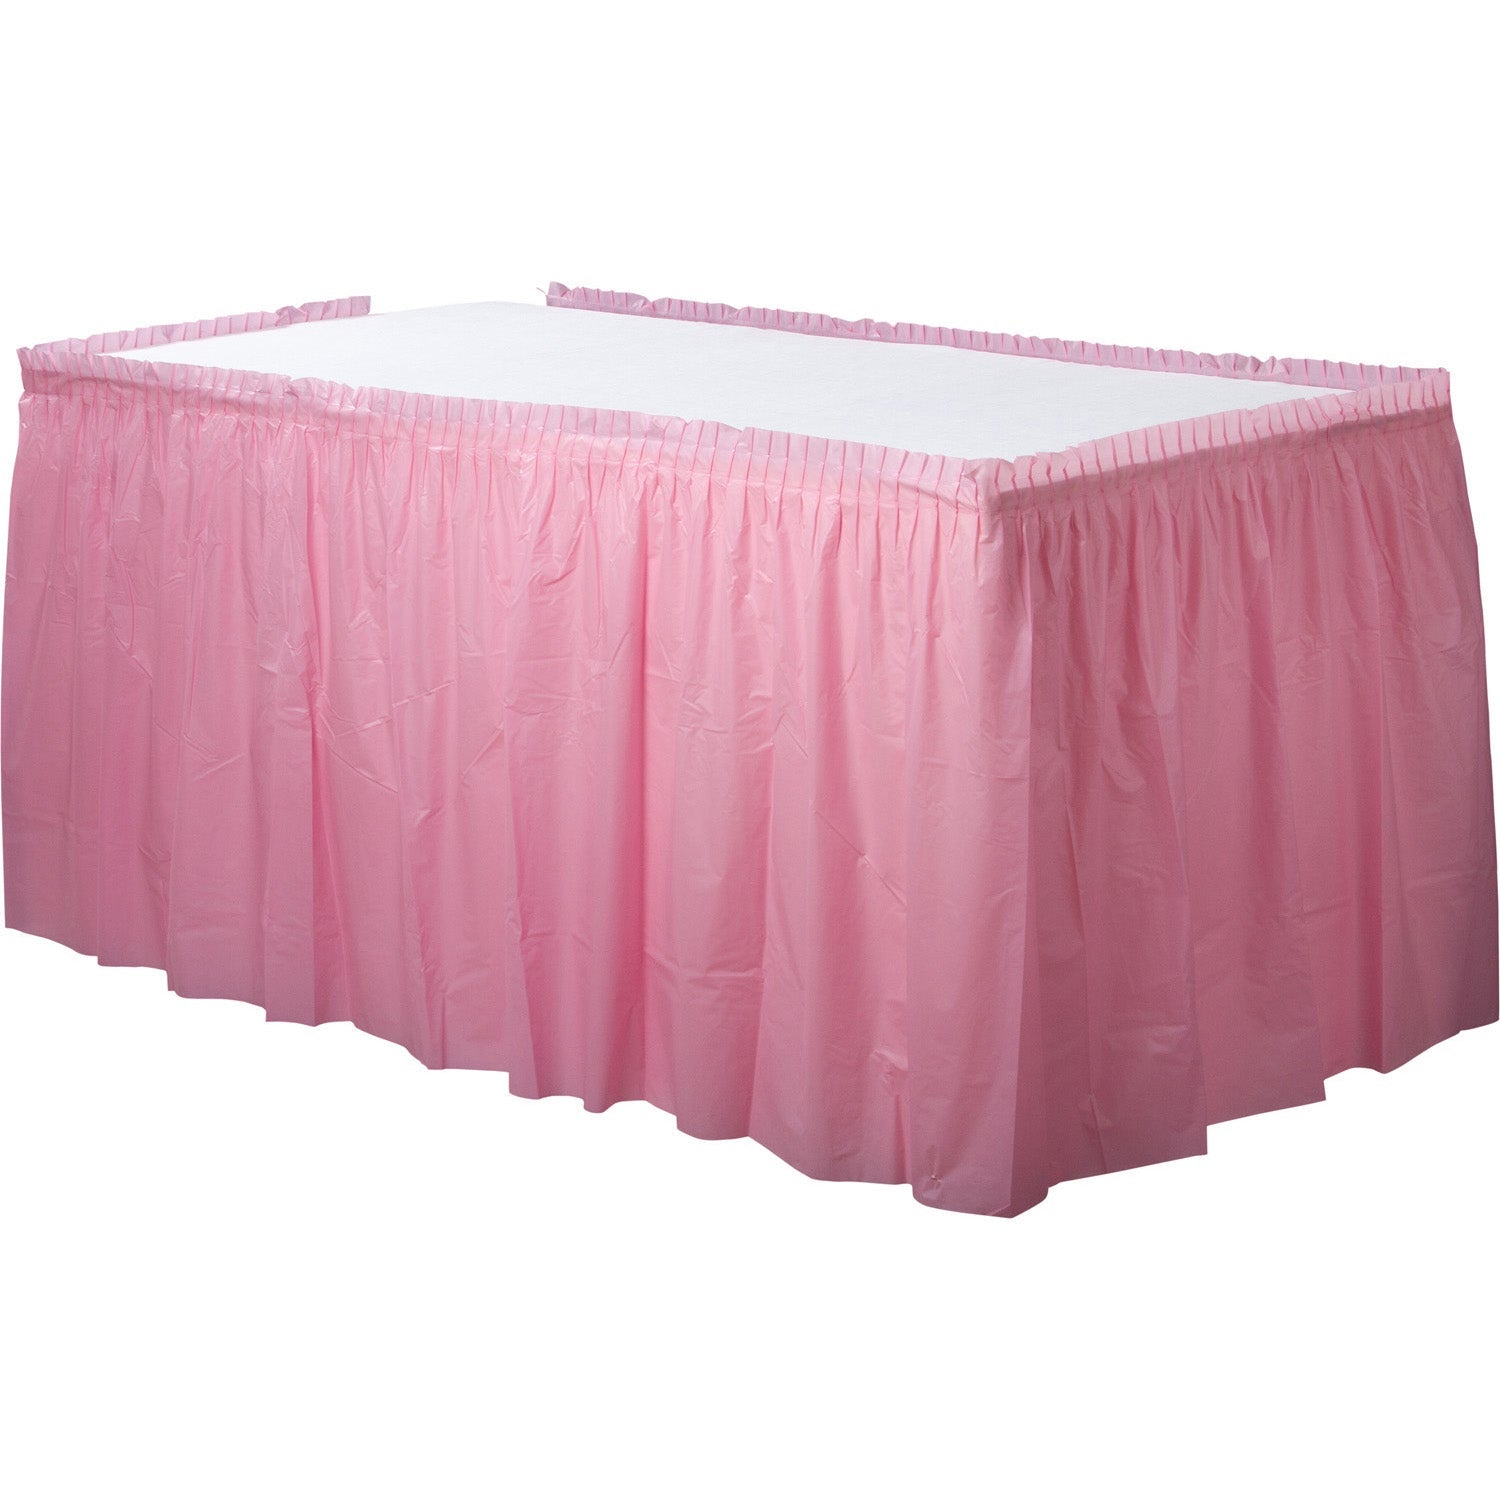 Pink Plastic Tableskirt, 4.26m x 73cm